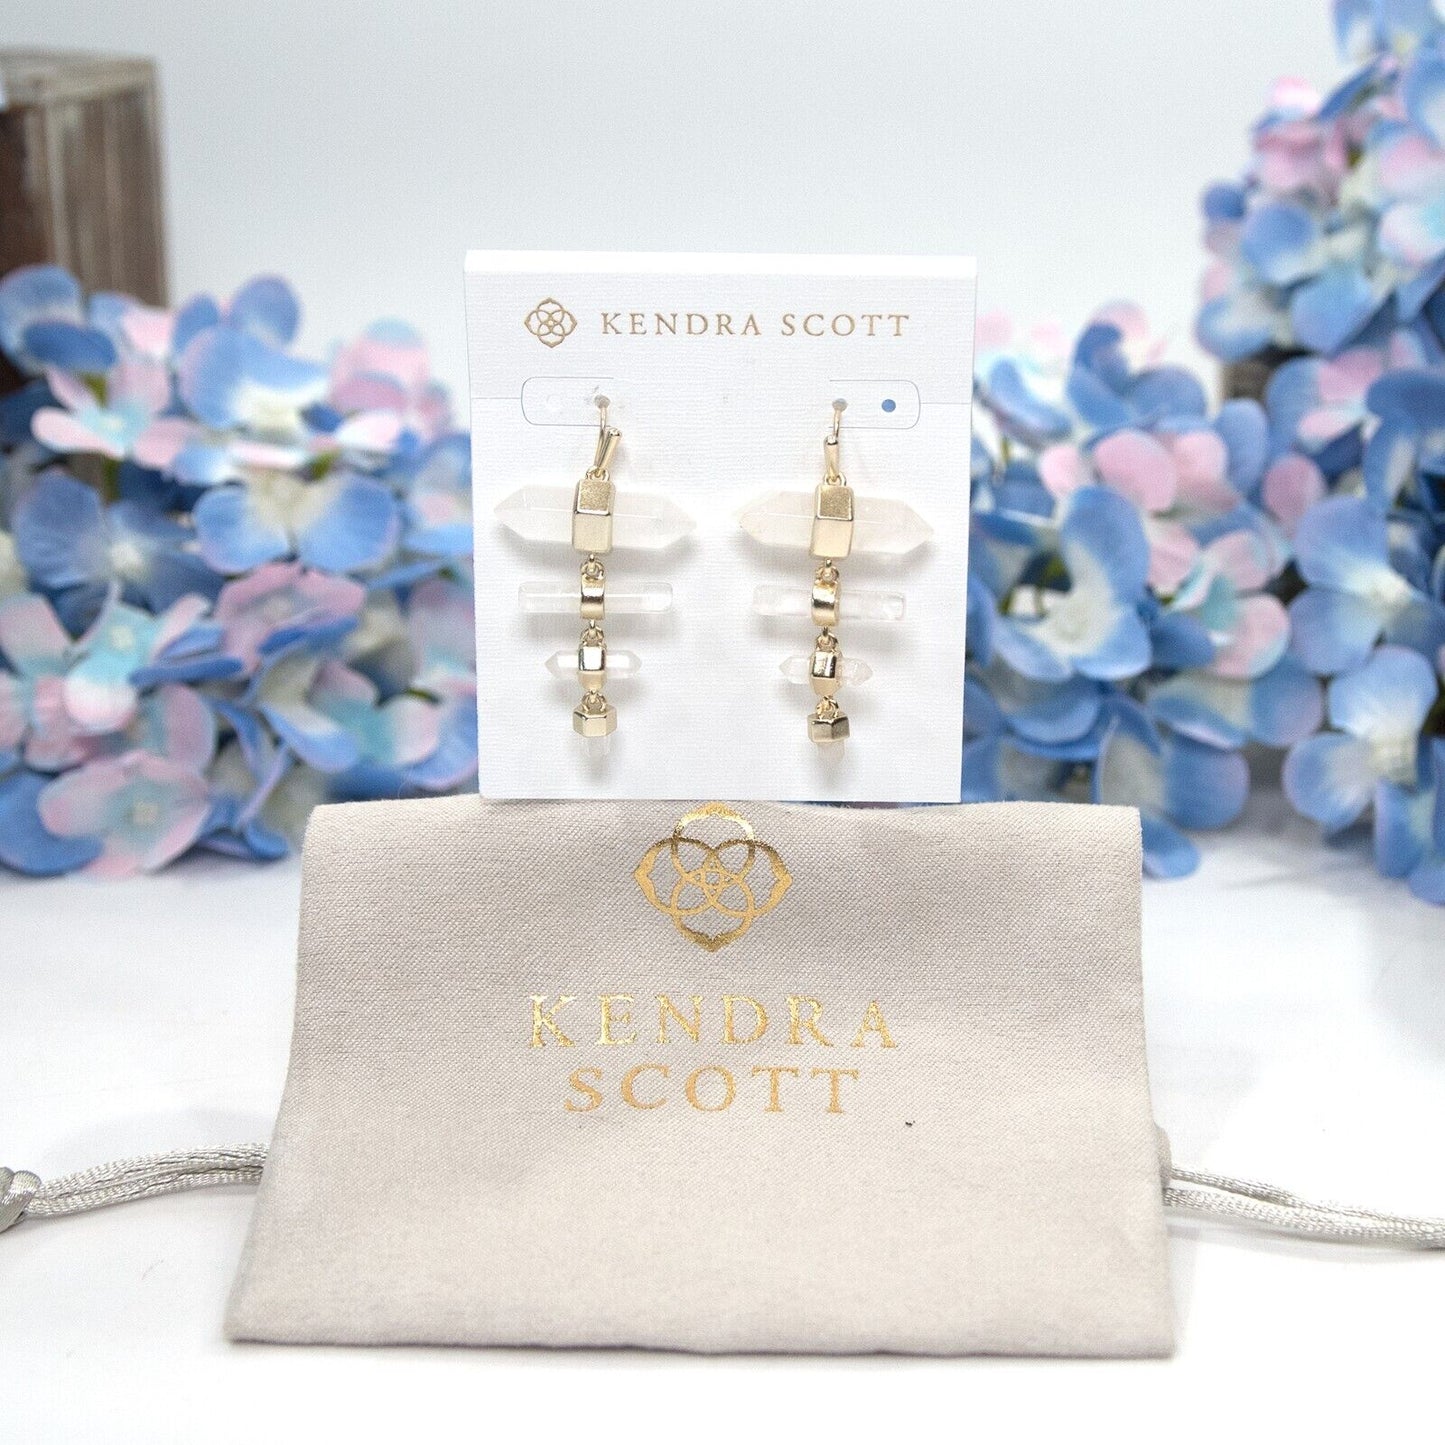 Kendra Scott White Quartz Jamie Gold Large Statement Earrings NWT